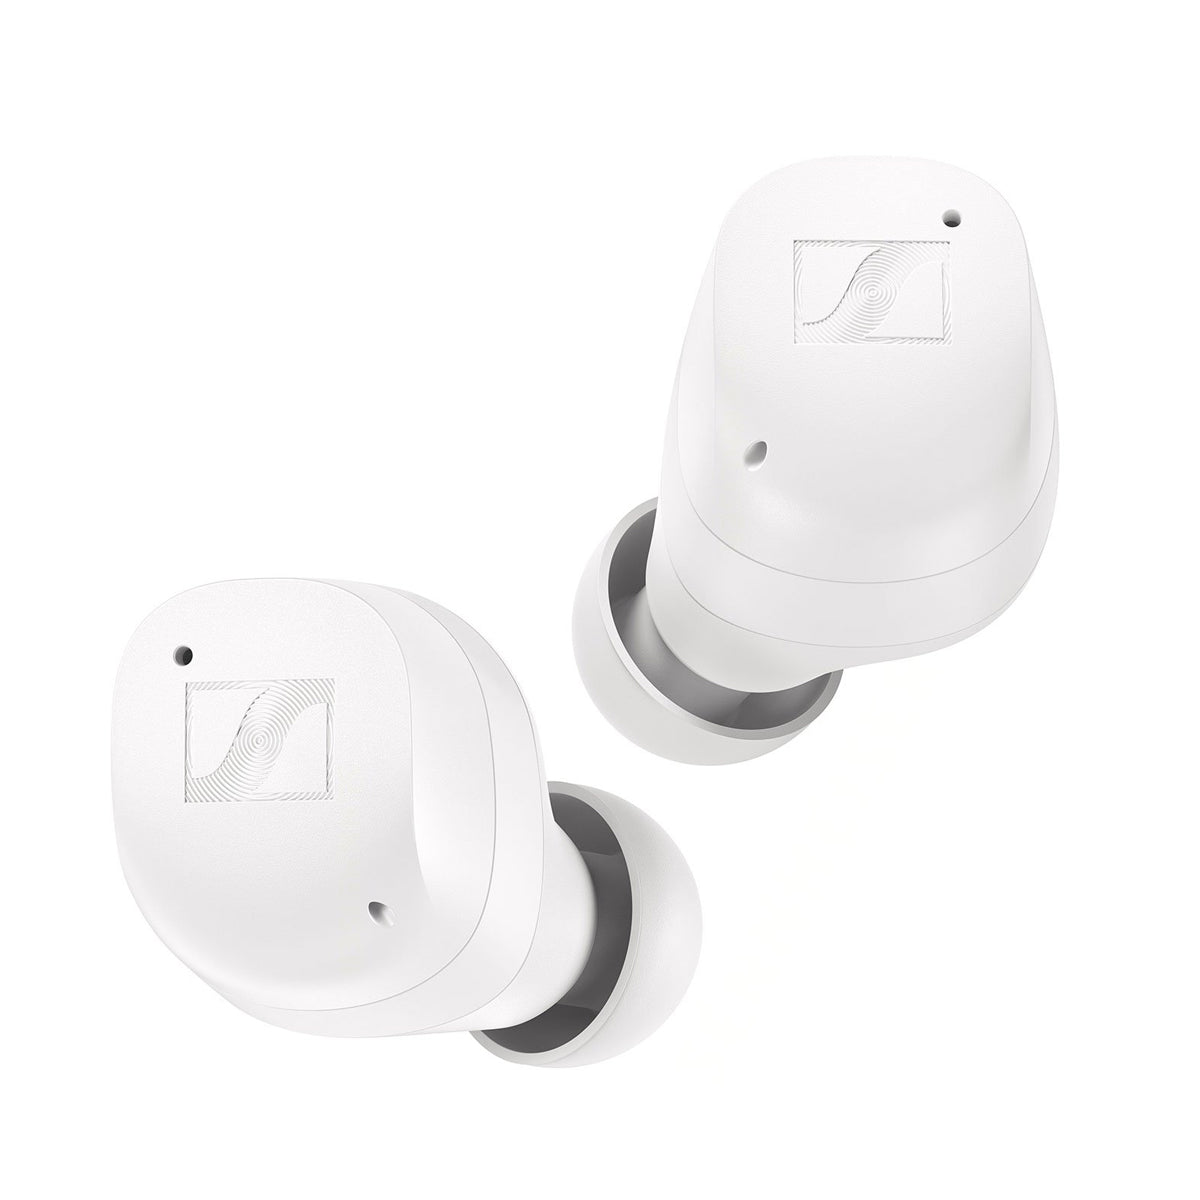 Sennheiser MOMENTUM True Wireless 3 Bluetooth Stereo Earphones - White